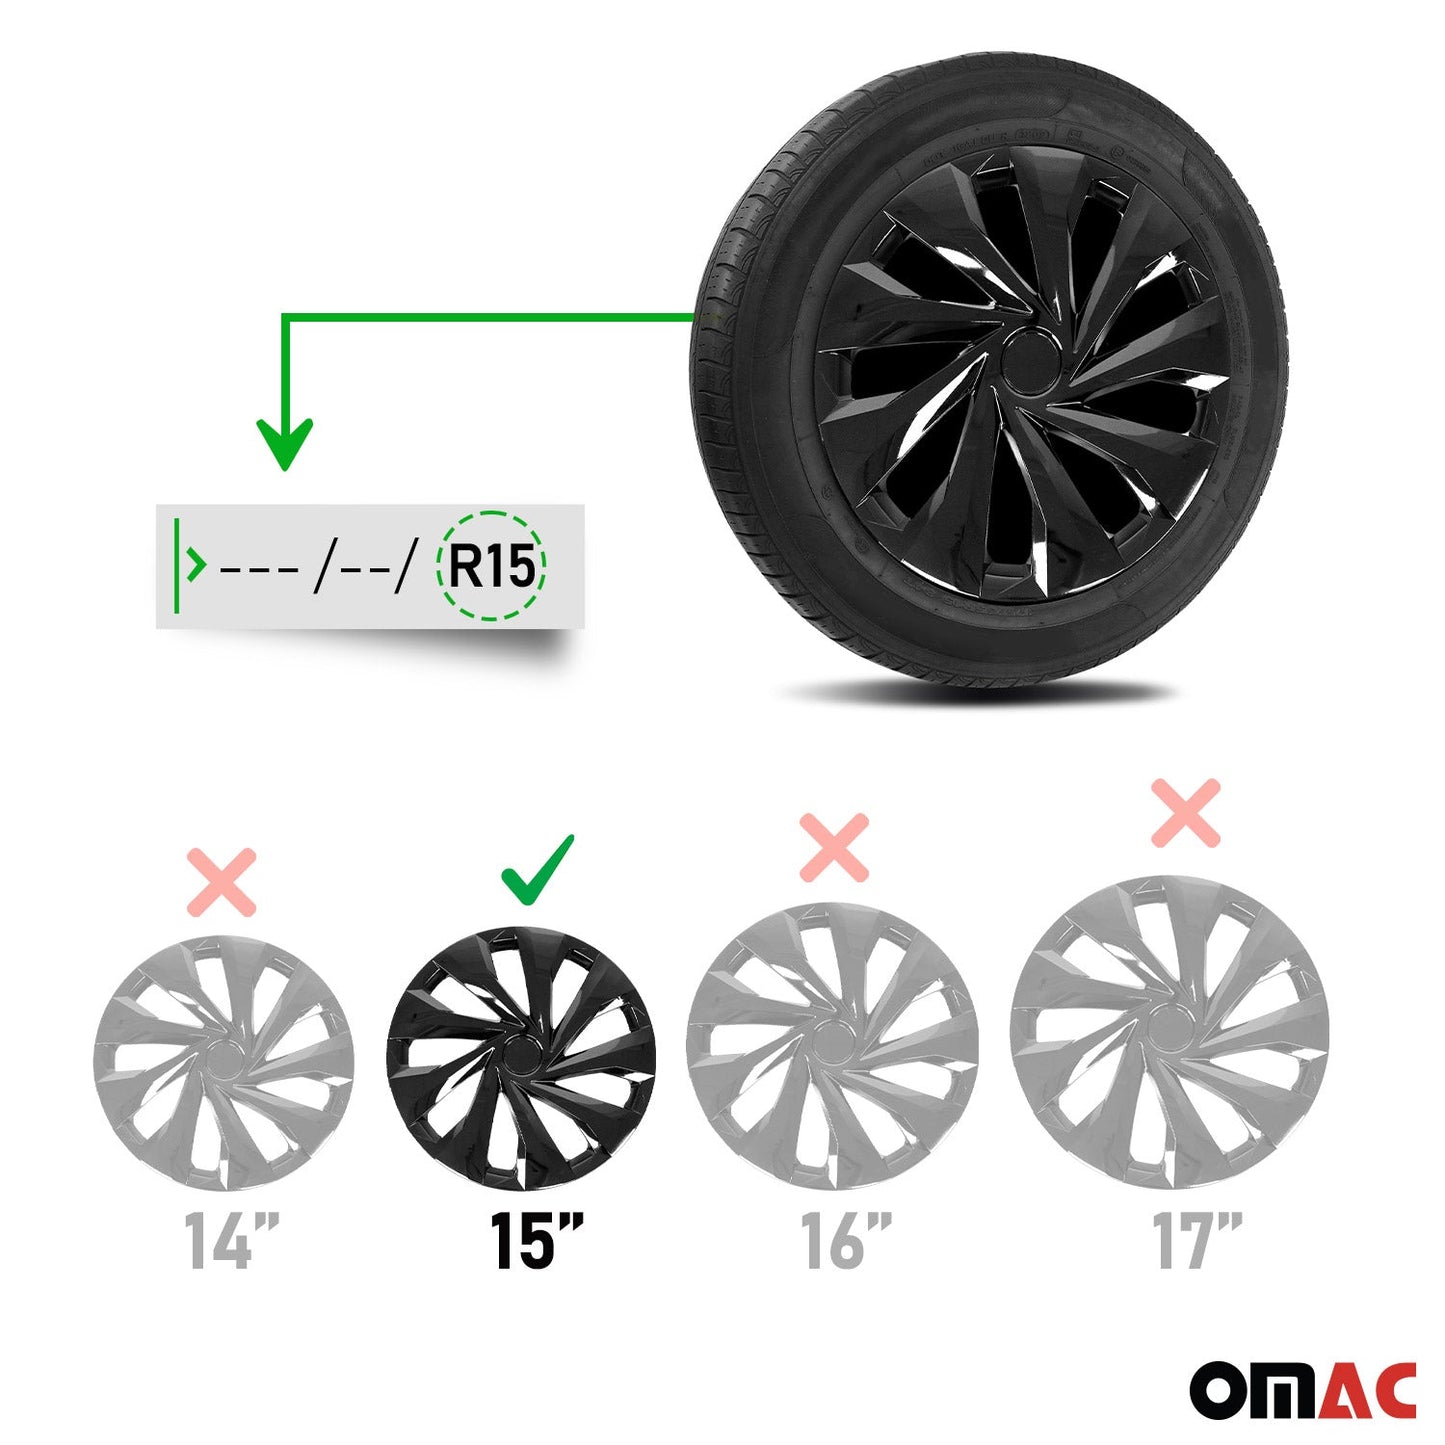 OMAC 15 Inch Wheel Rim Covers Hubcaps for Infiniti Black Gloss G002459